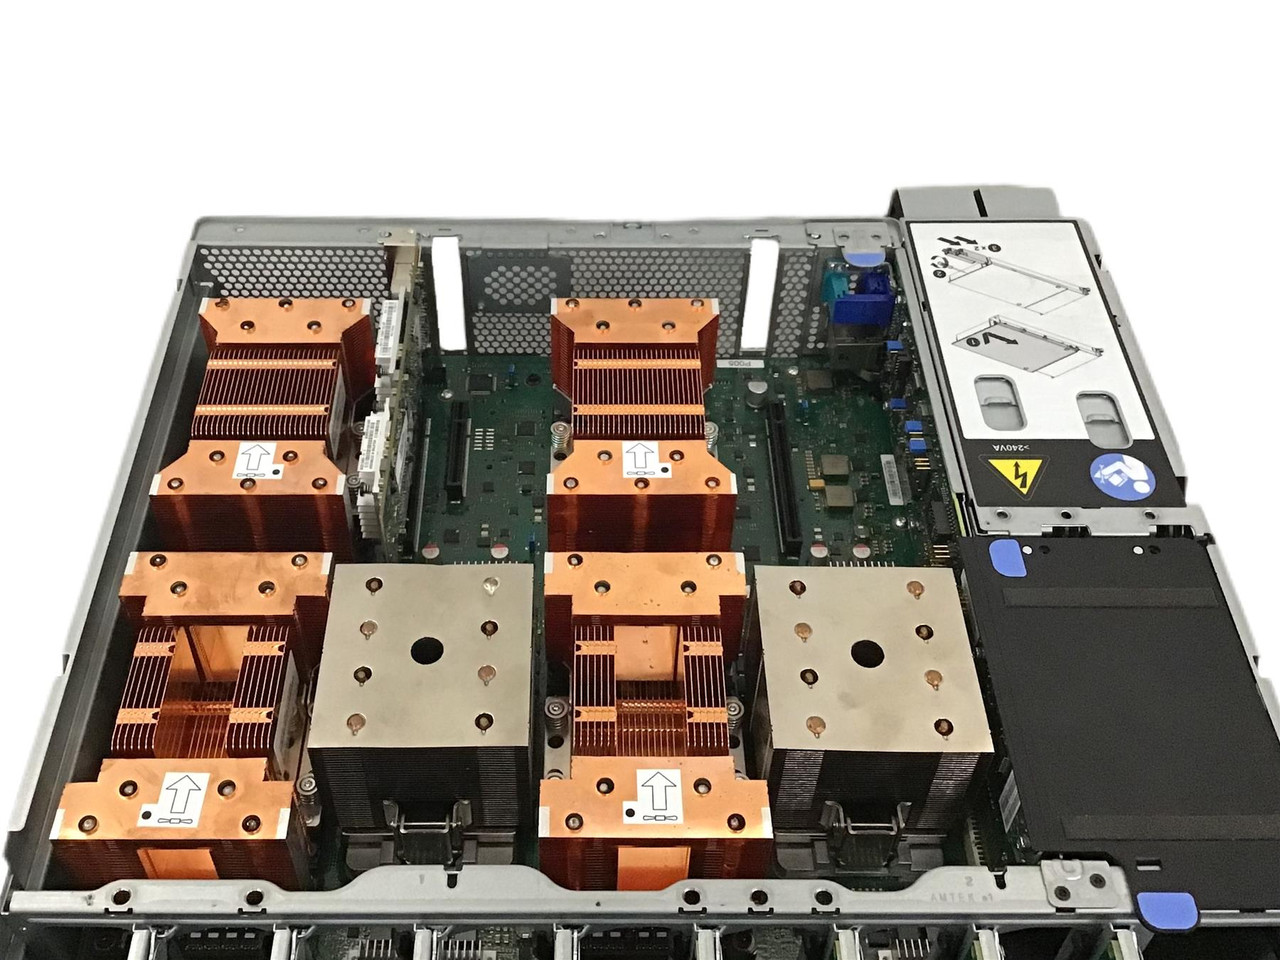 IBM S822LC 8335 Power 8 2U Server 2x 3.4Ghz 10-Cores AI 4x Nvidia P100 GPU